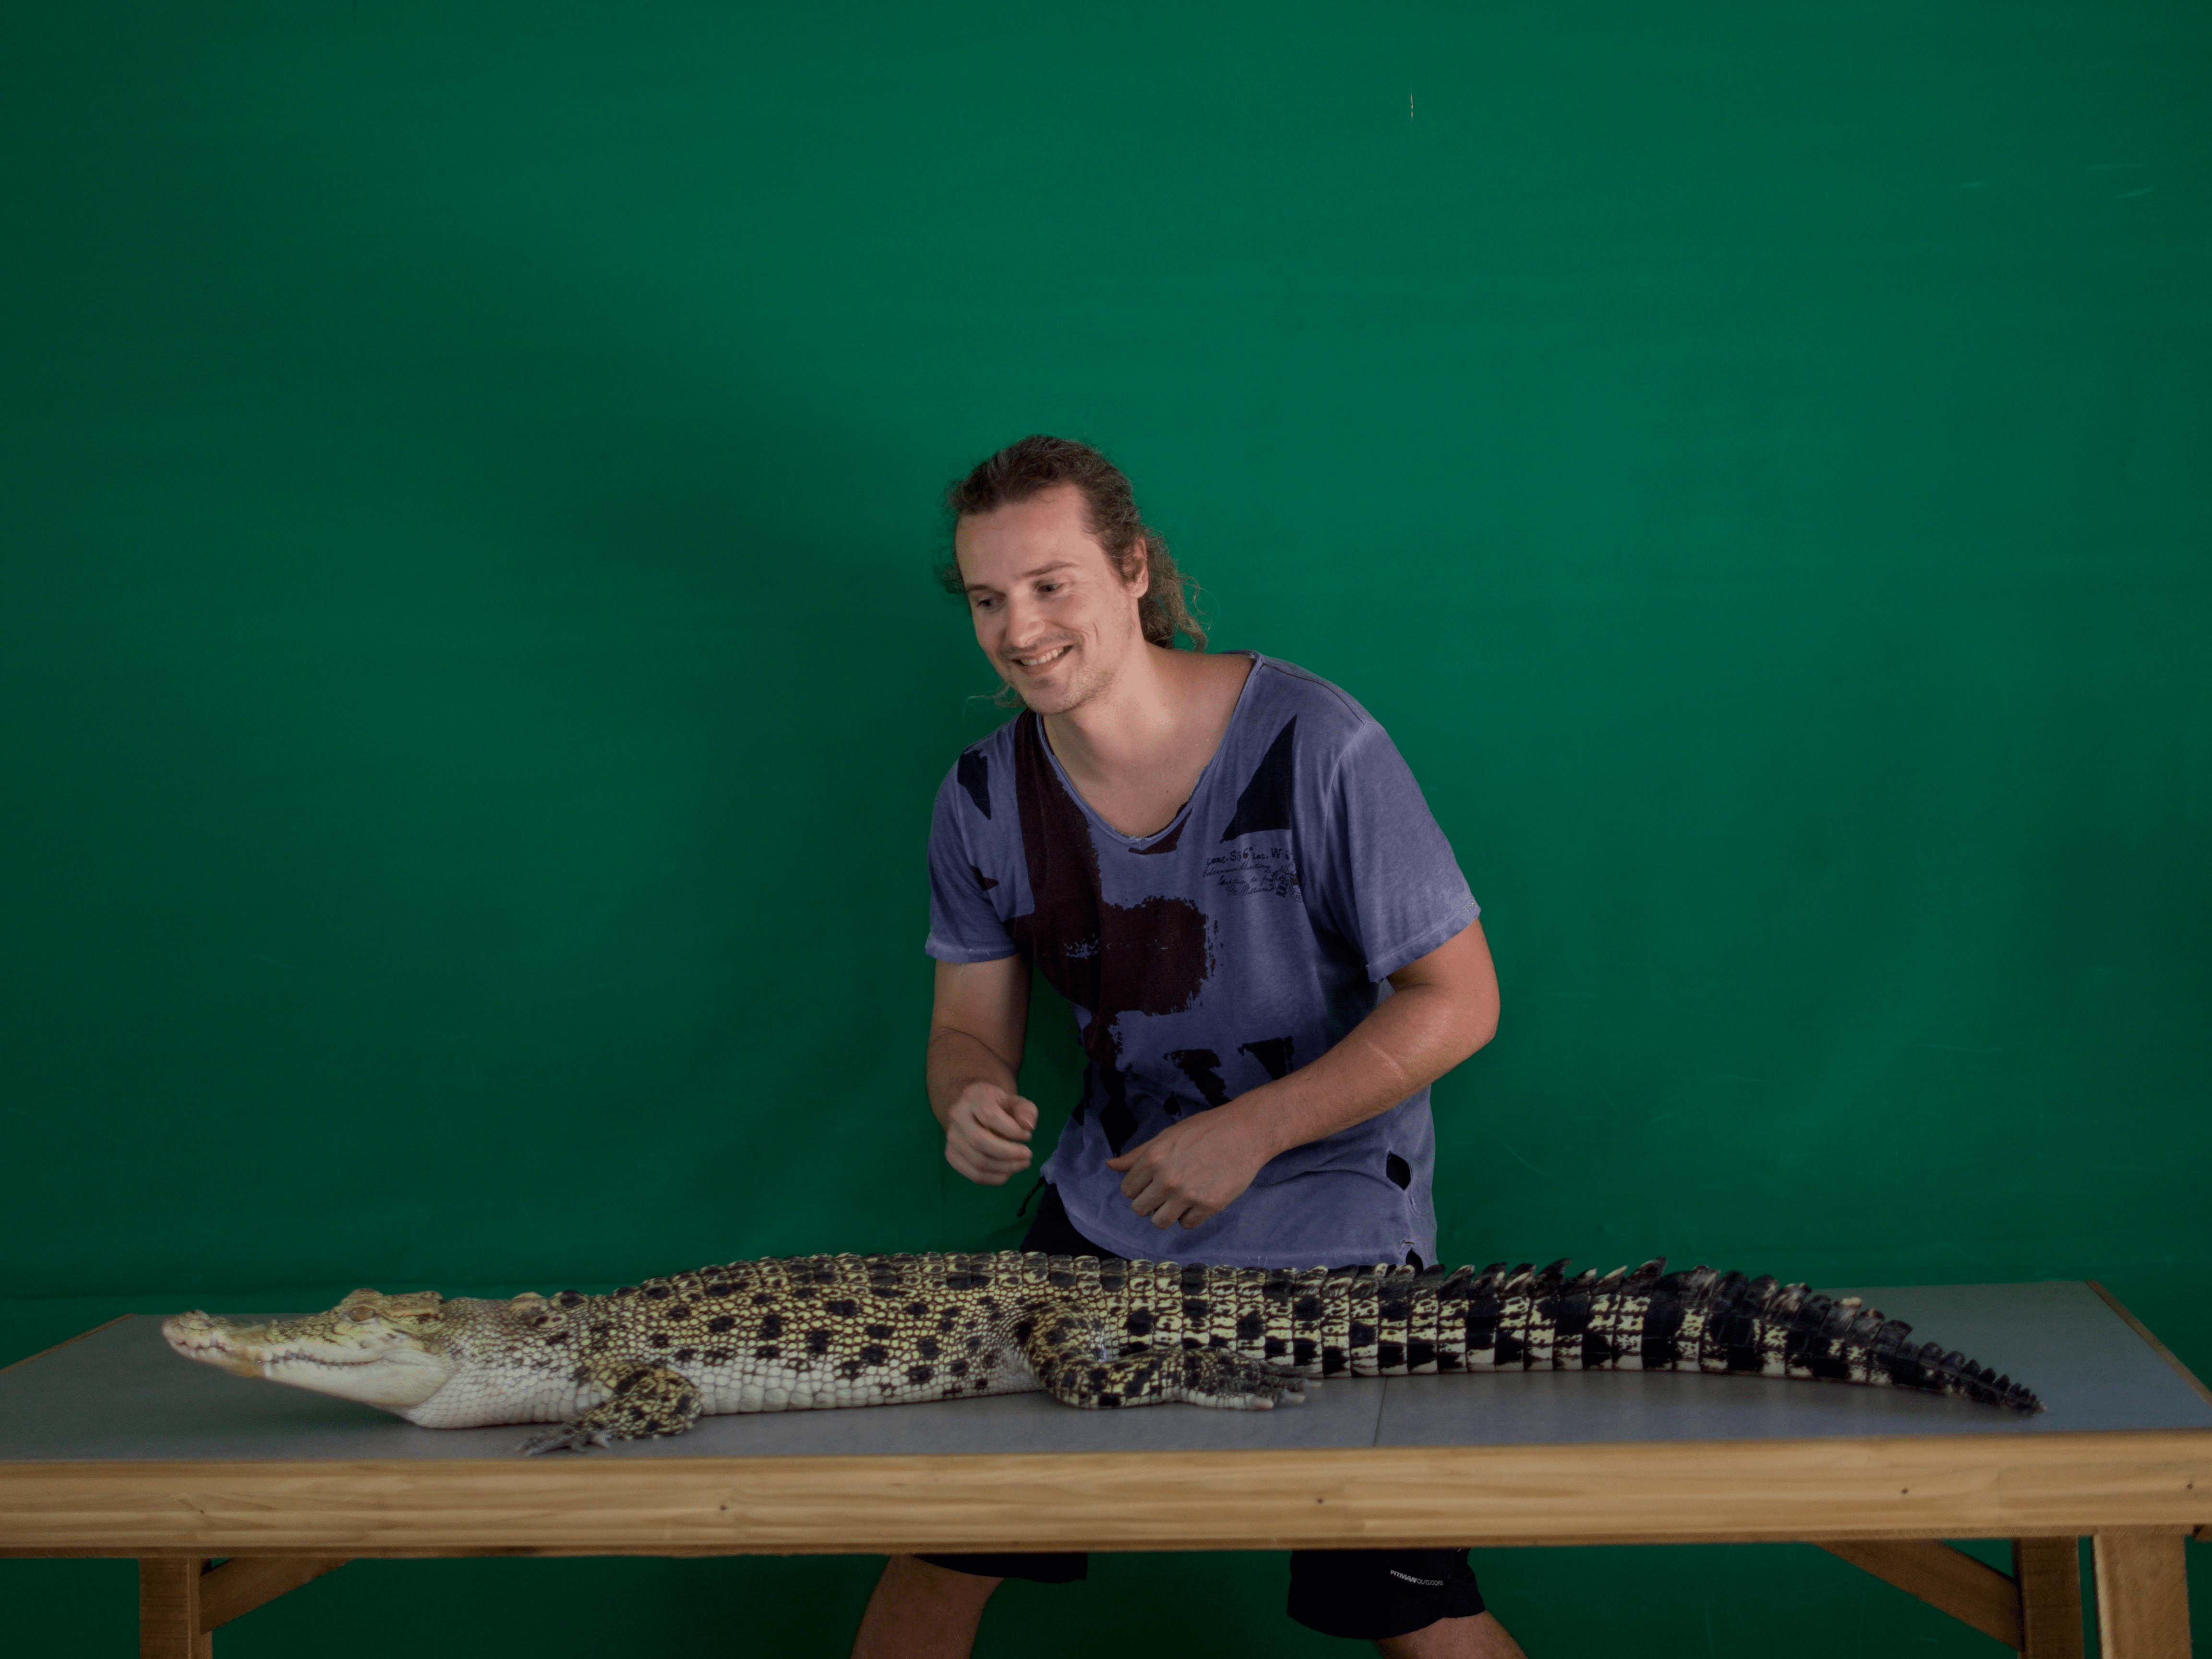 LennyThroughParadise posing with an alligator